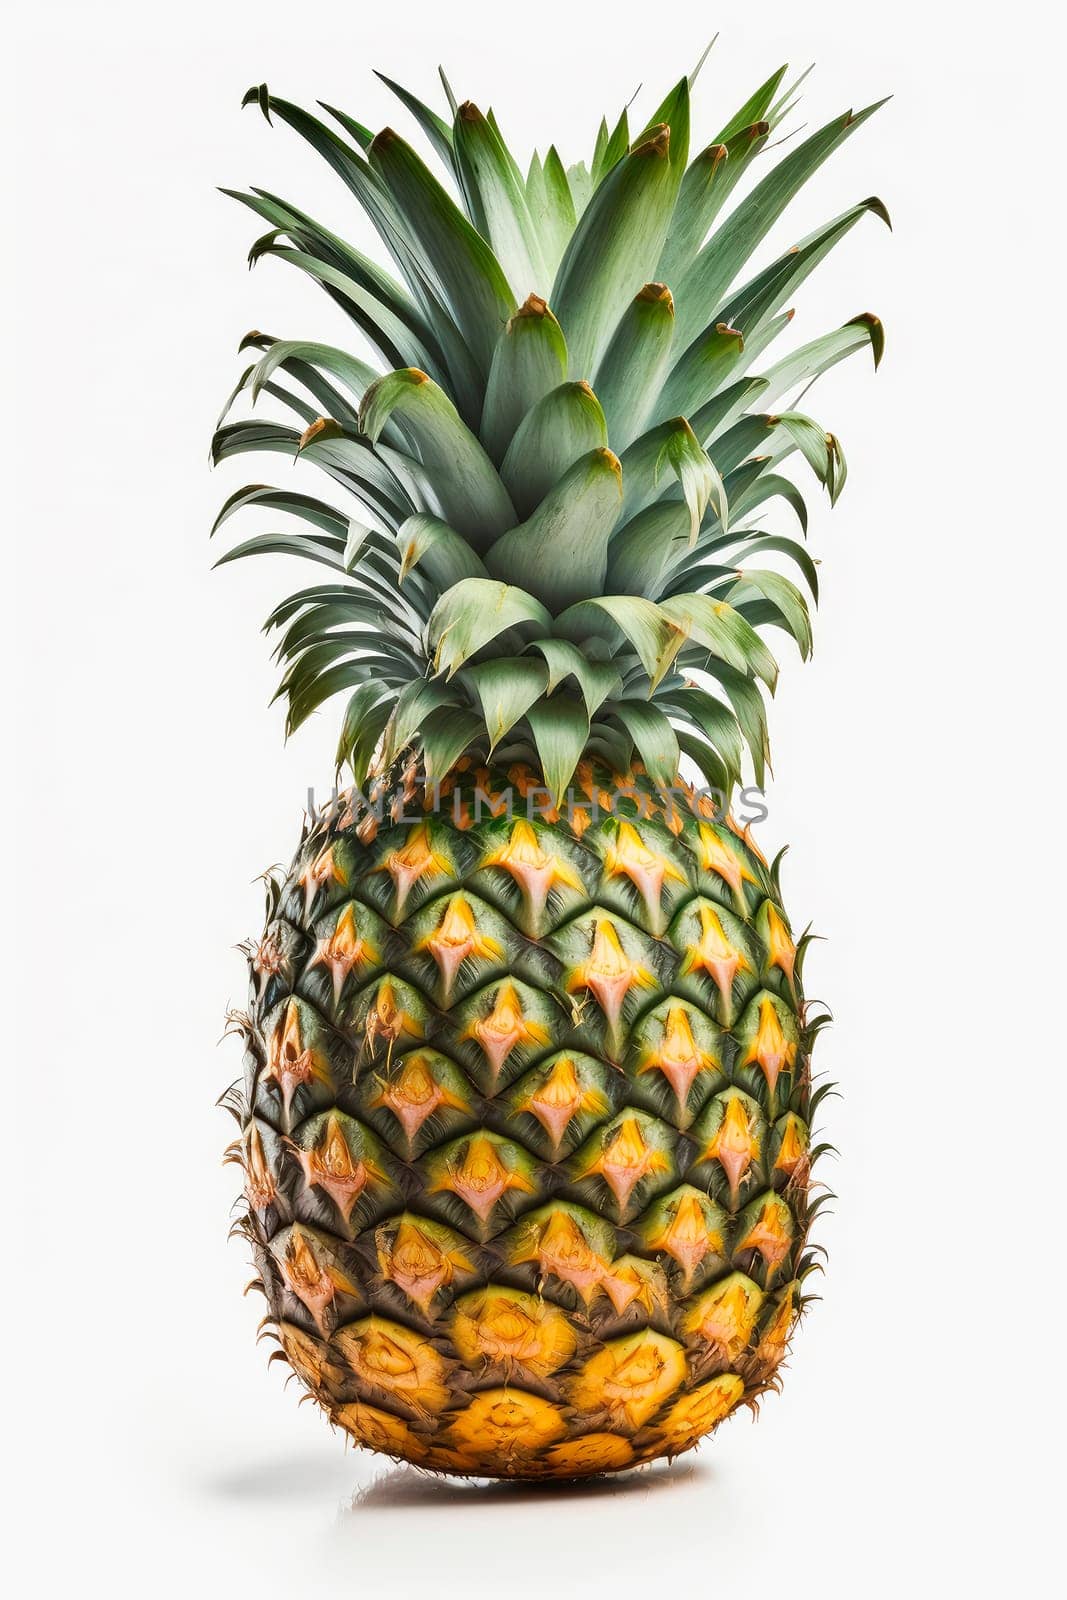 Pineapple isolate on white background. by yanadjana